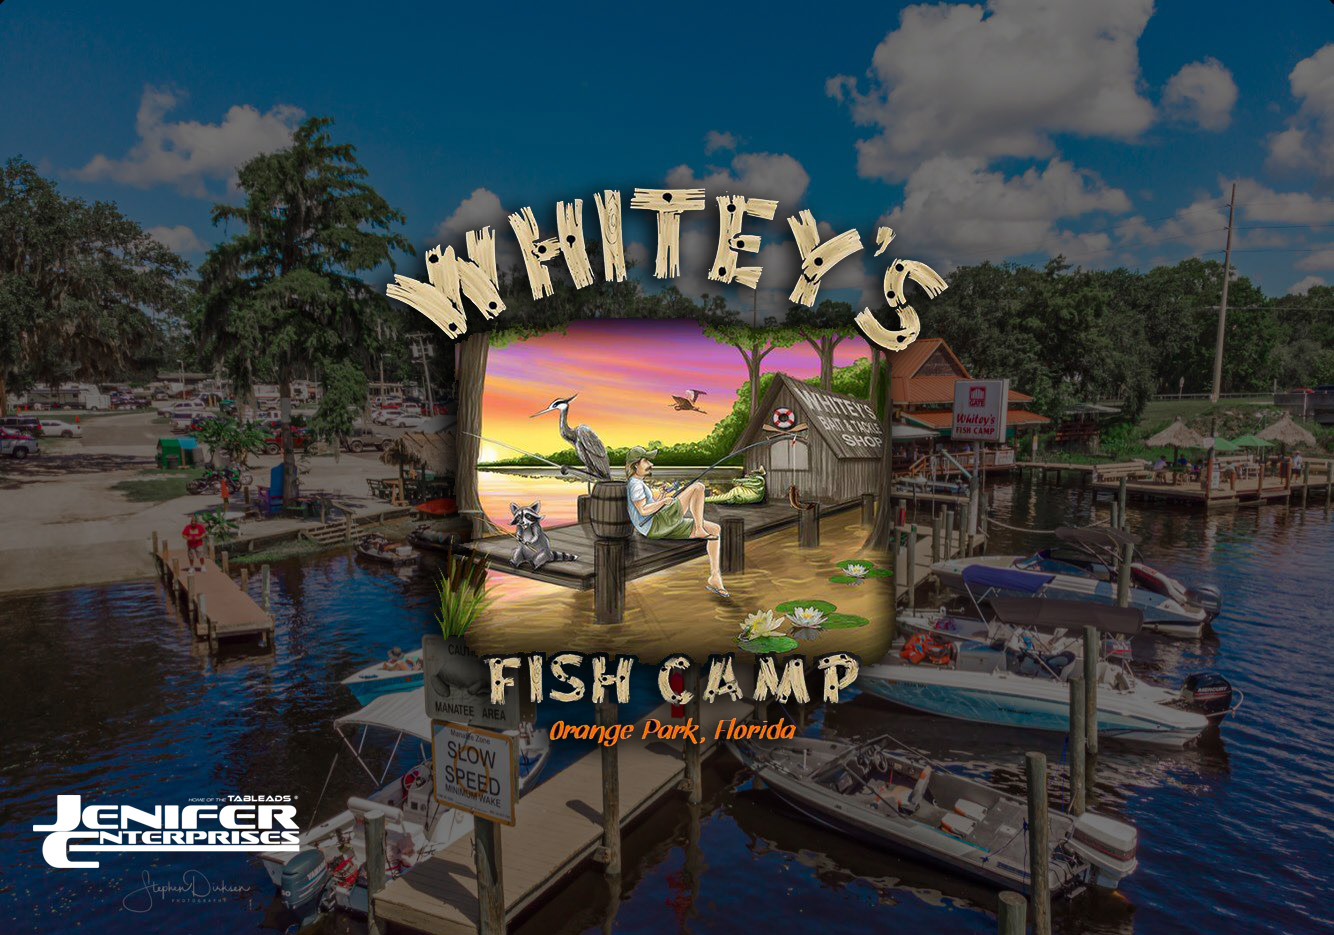 Whiteys Fish Camp Jenifer Enterprises home of the TableAds